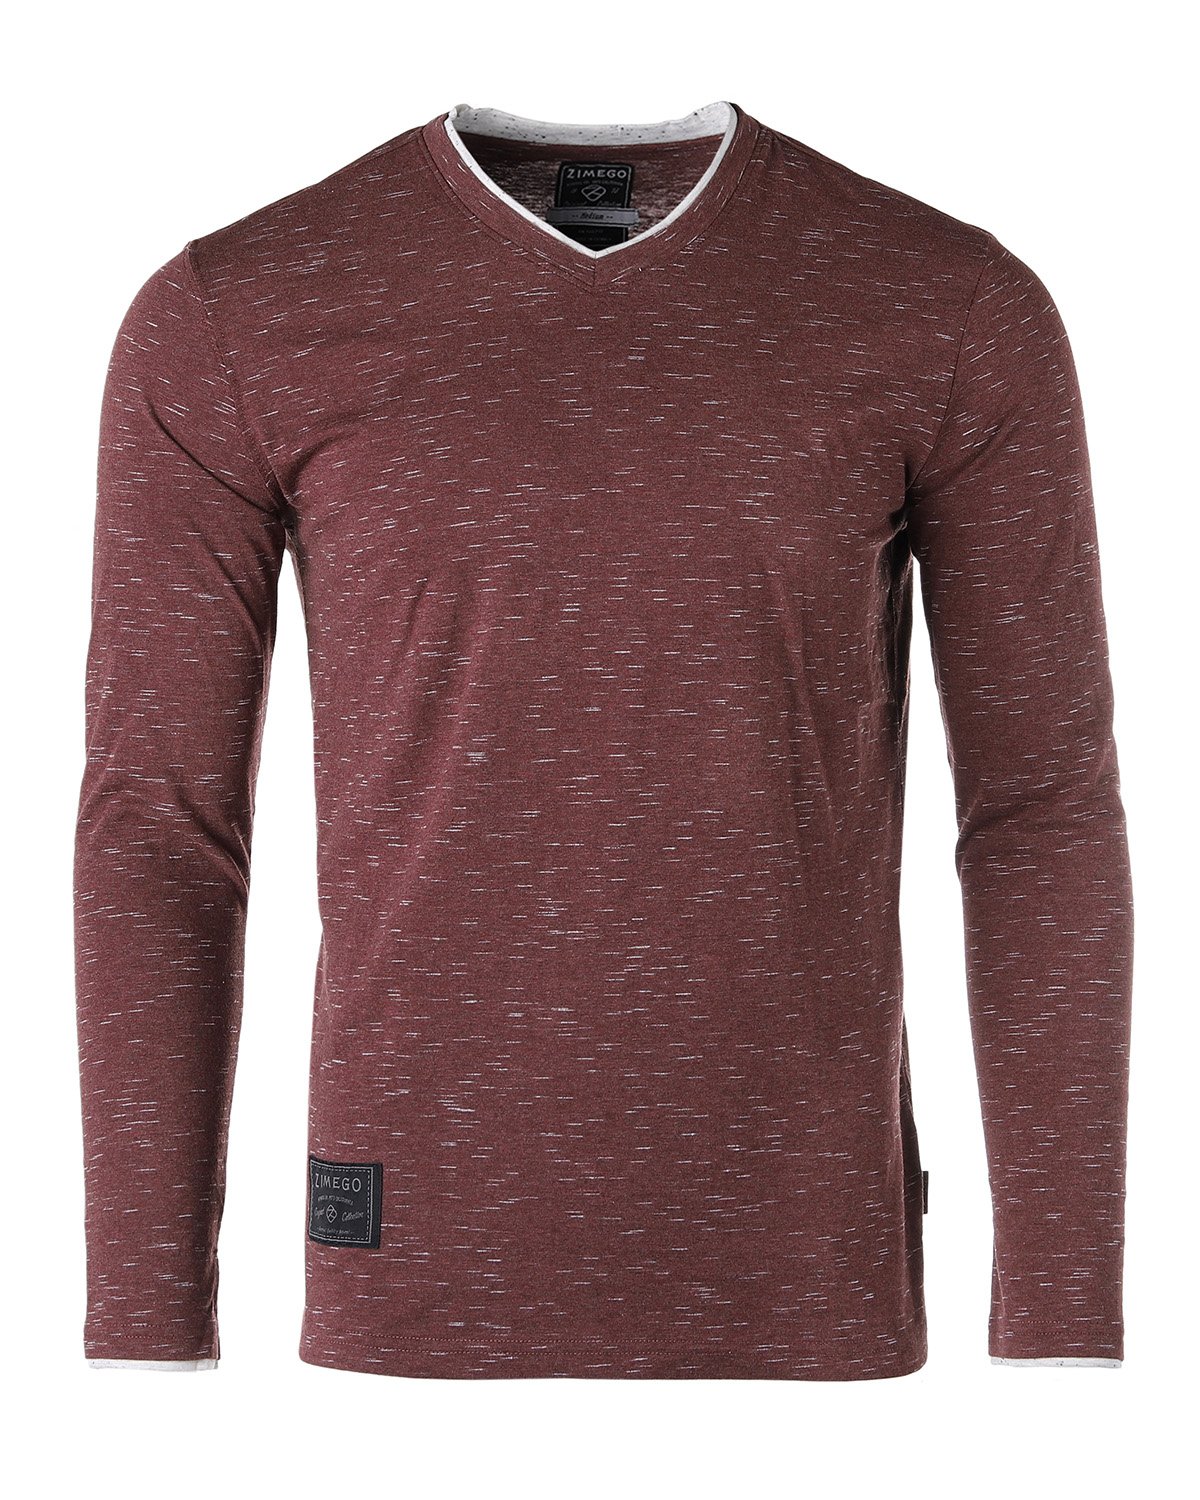 ZIMEGO Men’s Long Sleeve Athletic Fit V-Neck Activewear T-Shirt - image 1 of 6